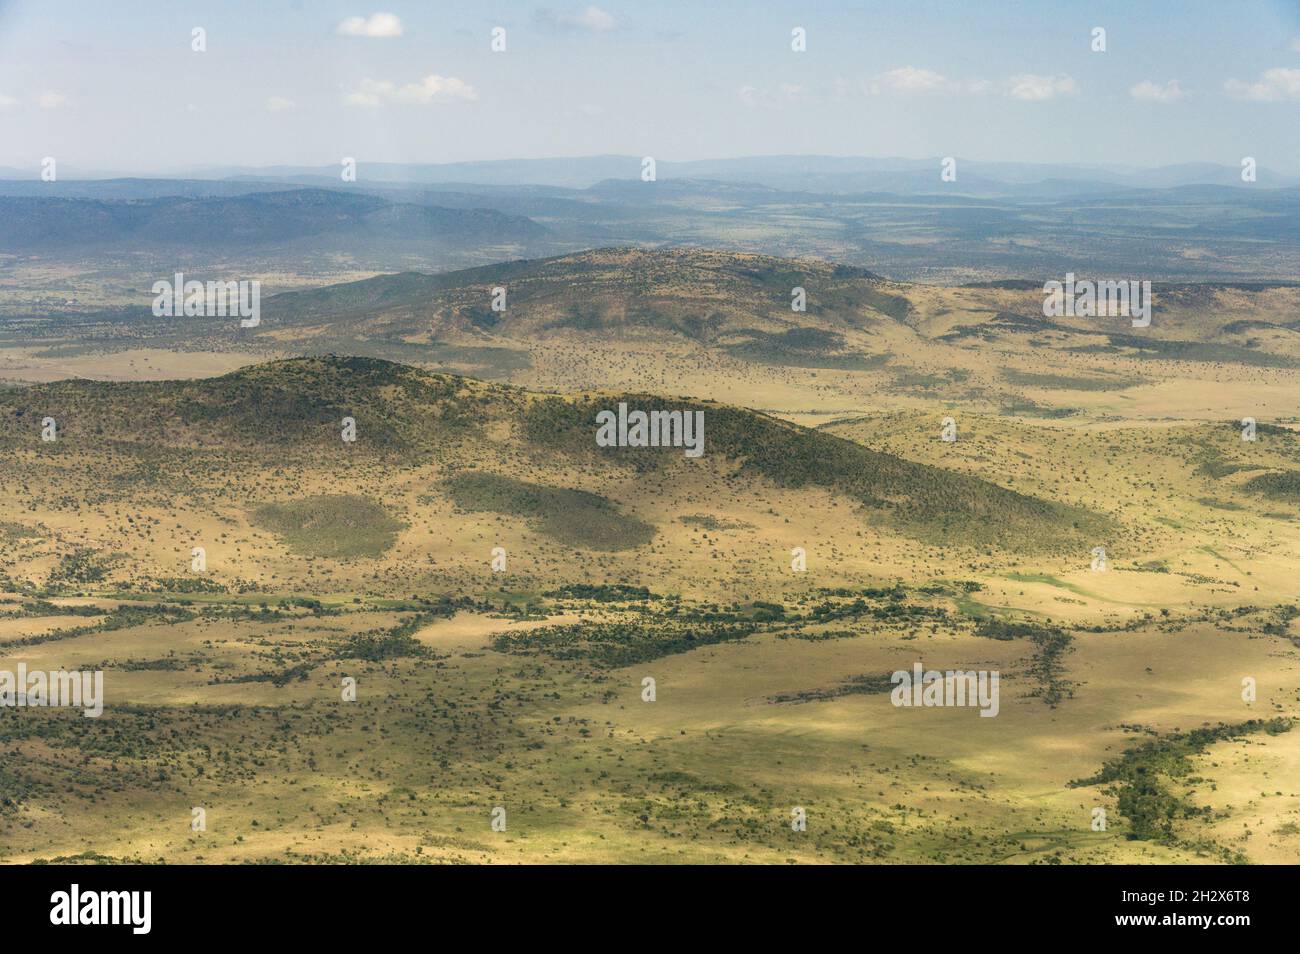 Vista aerea di ondulate colline semi aride punteggiate di alberi, Kenya Foto Stock